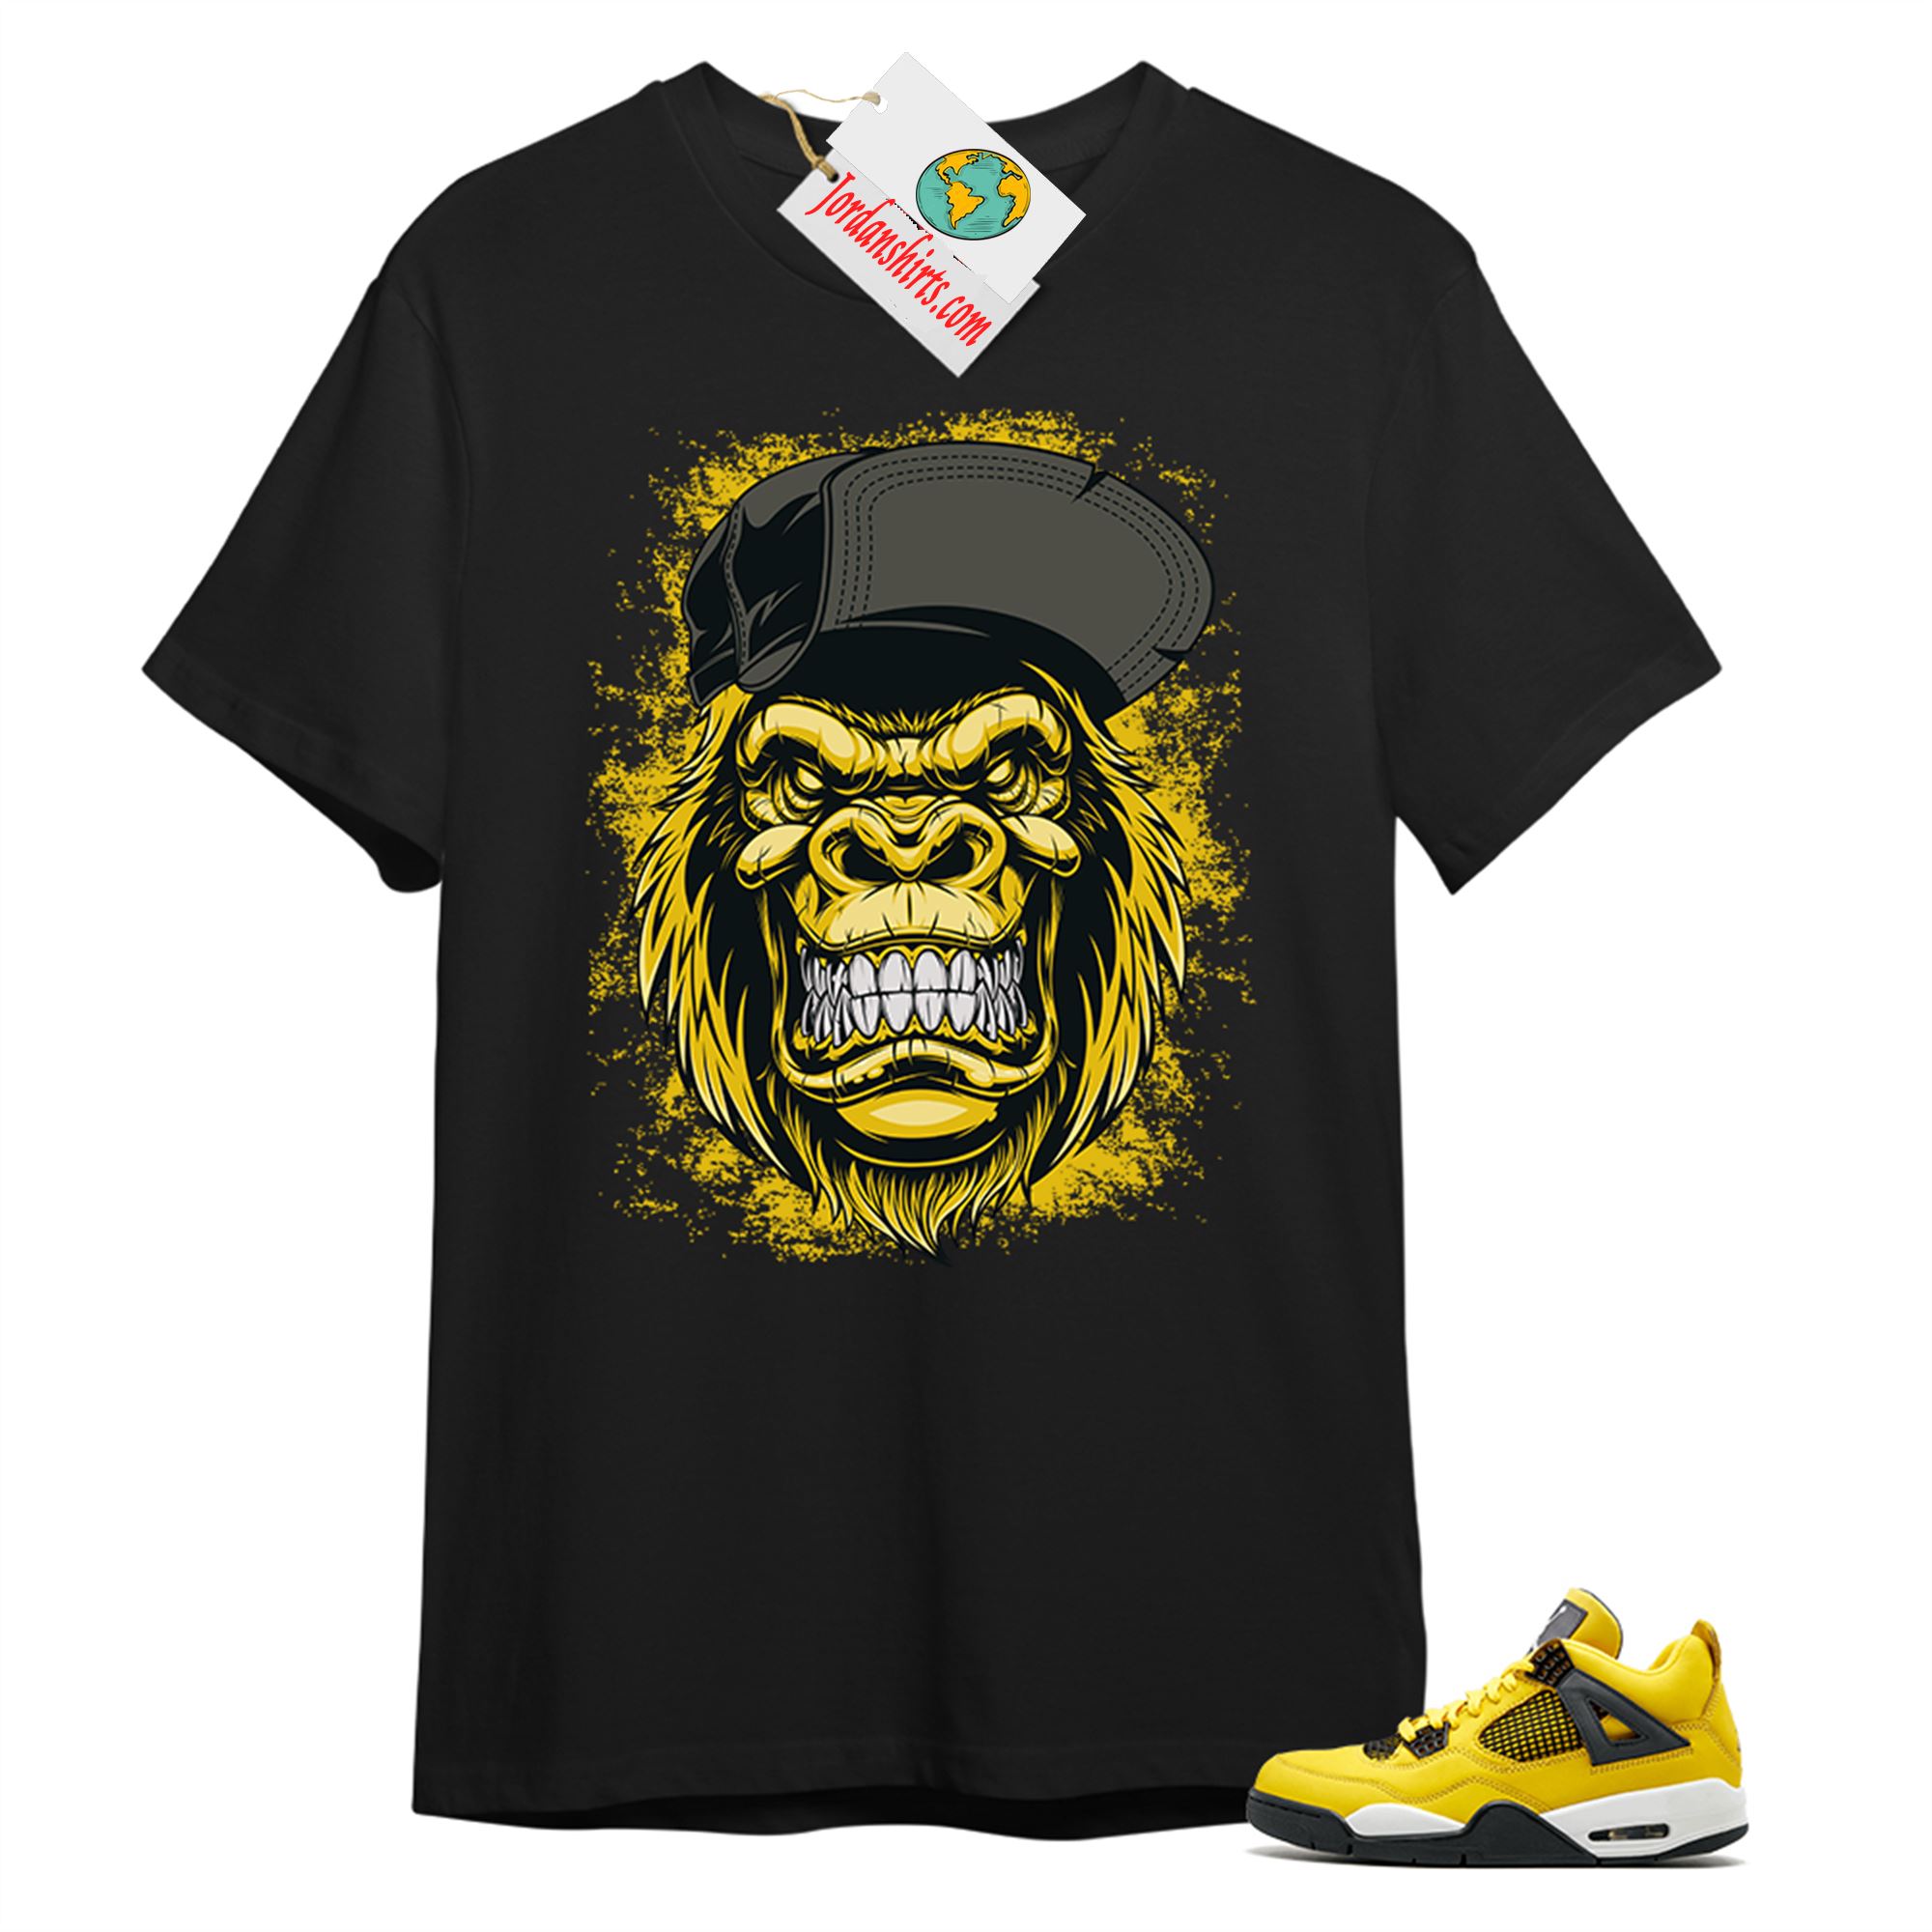 Jordan 4 Shirt, Ferocious Gorilla Black T-shirt Air Jordan 4 Tour Yellow Lightning 4s Full Size Up To 5xl